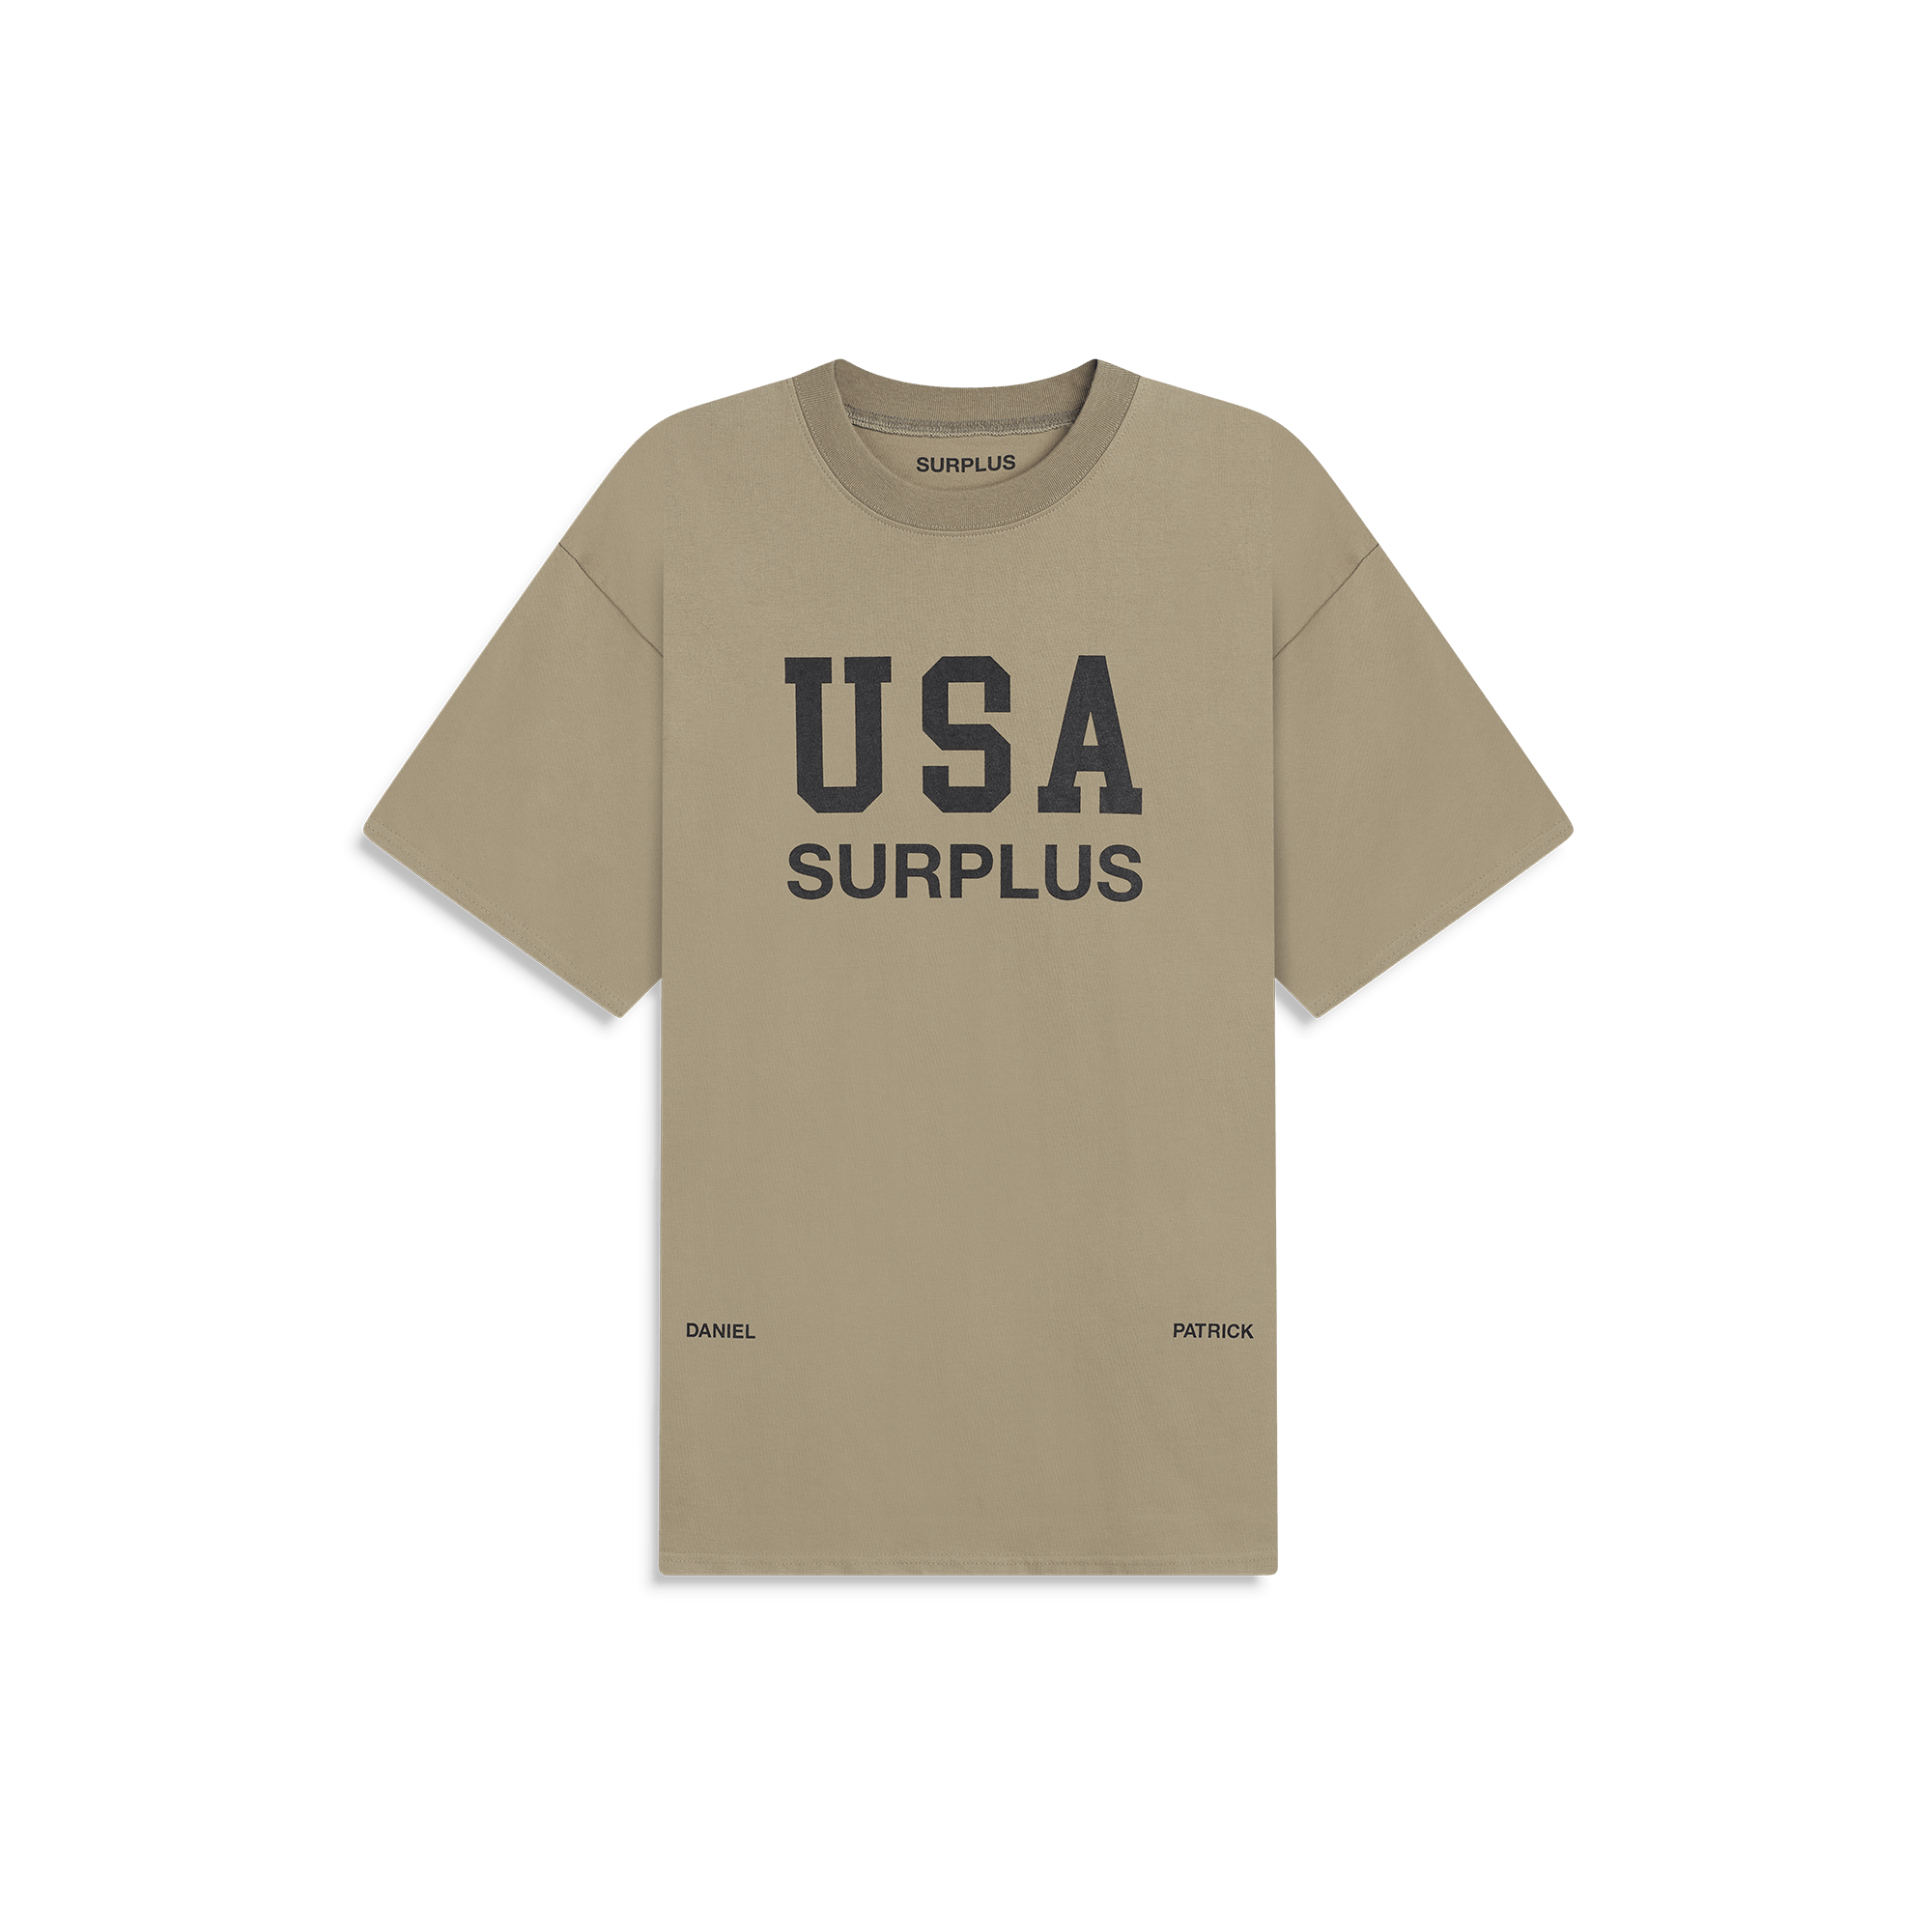 USA surplus tee / washed olive + black